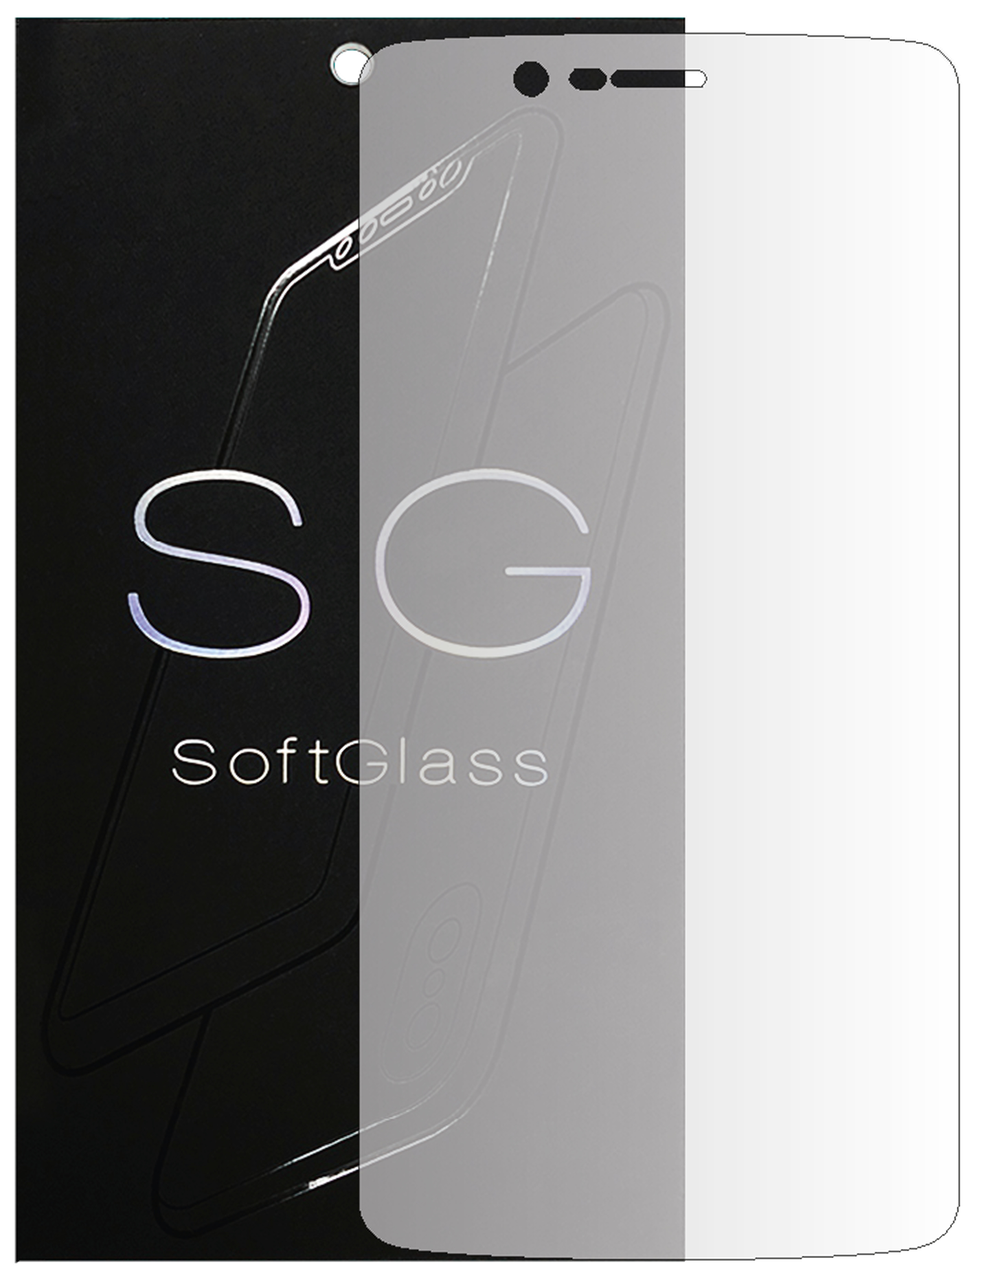 Бронеплівка ElePhone p8000 на екран поліуретанова SoftGlass